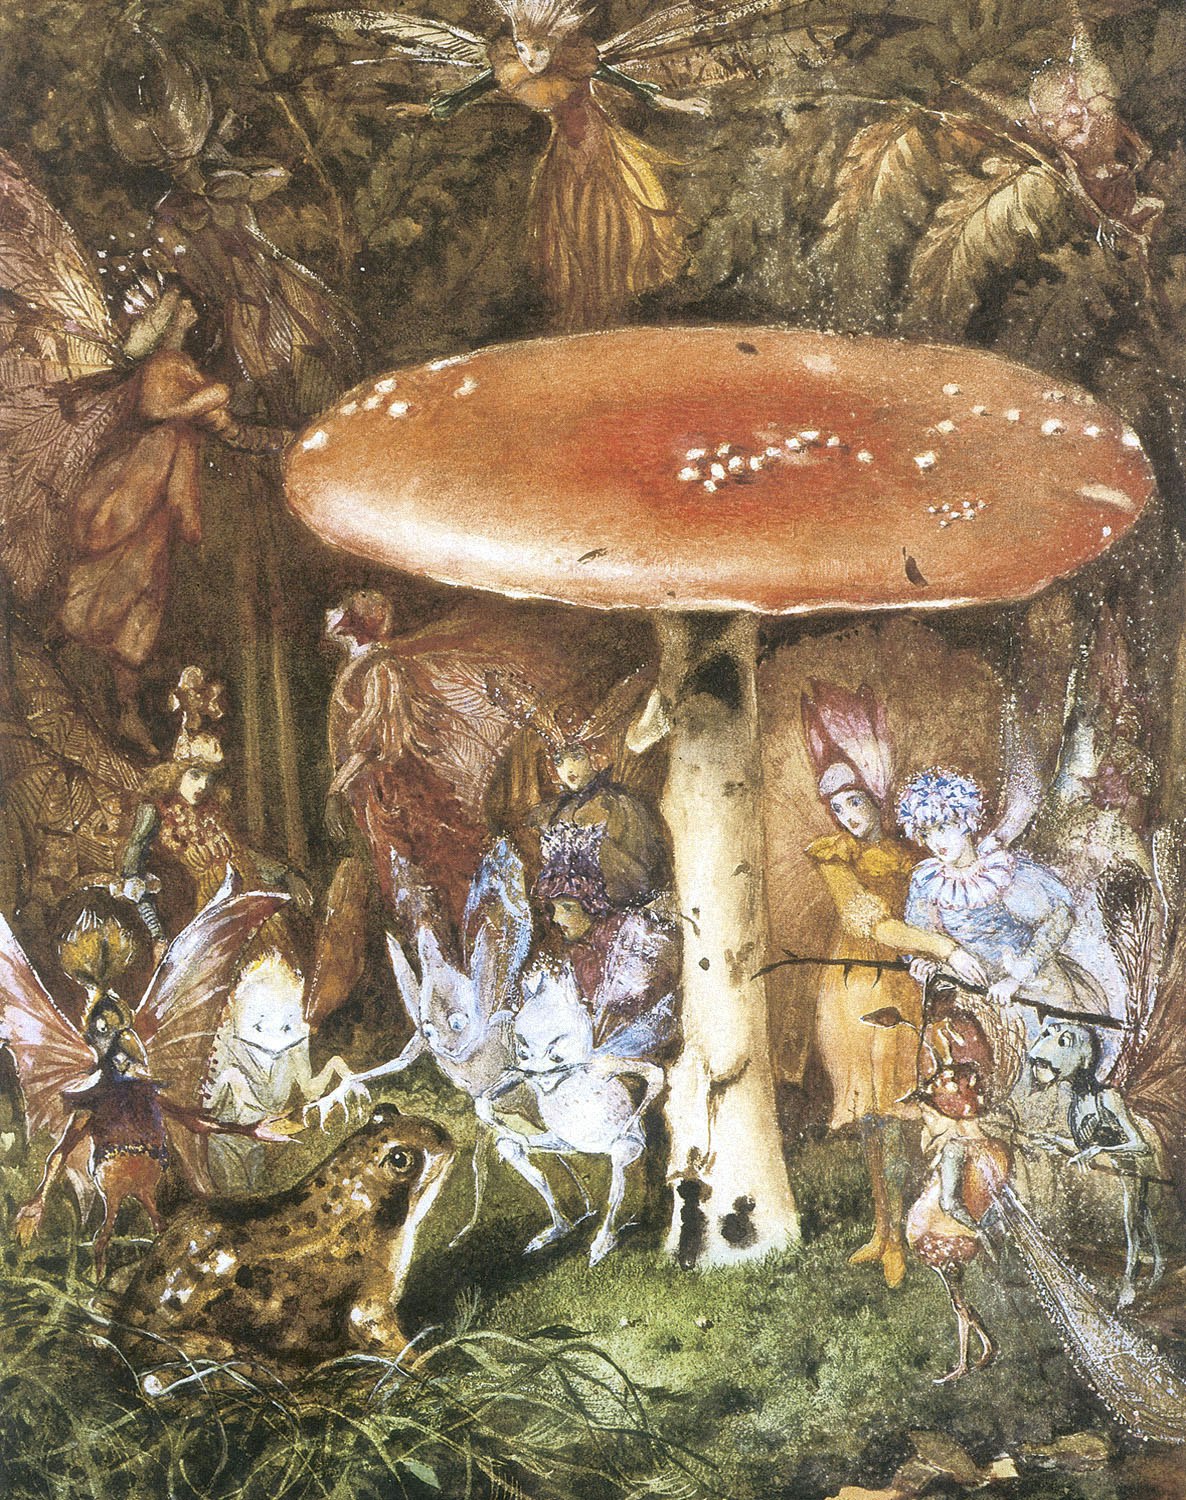 Alice in Wonderland Pin Mushroom Pin Toadstool Pin Witch Pin Fantasy Pin